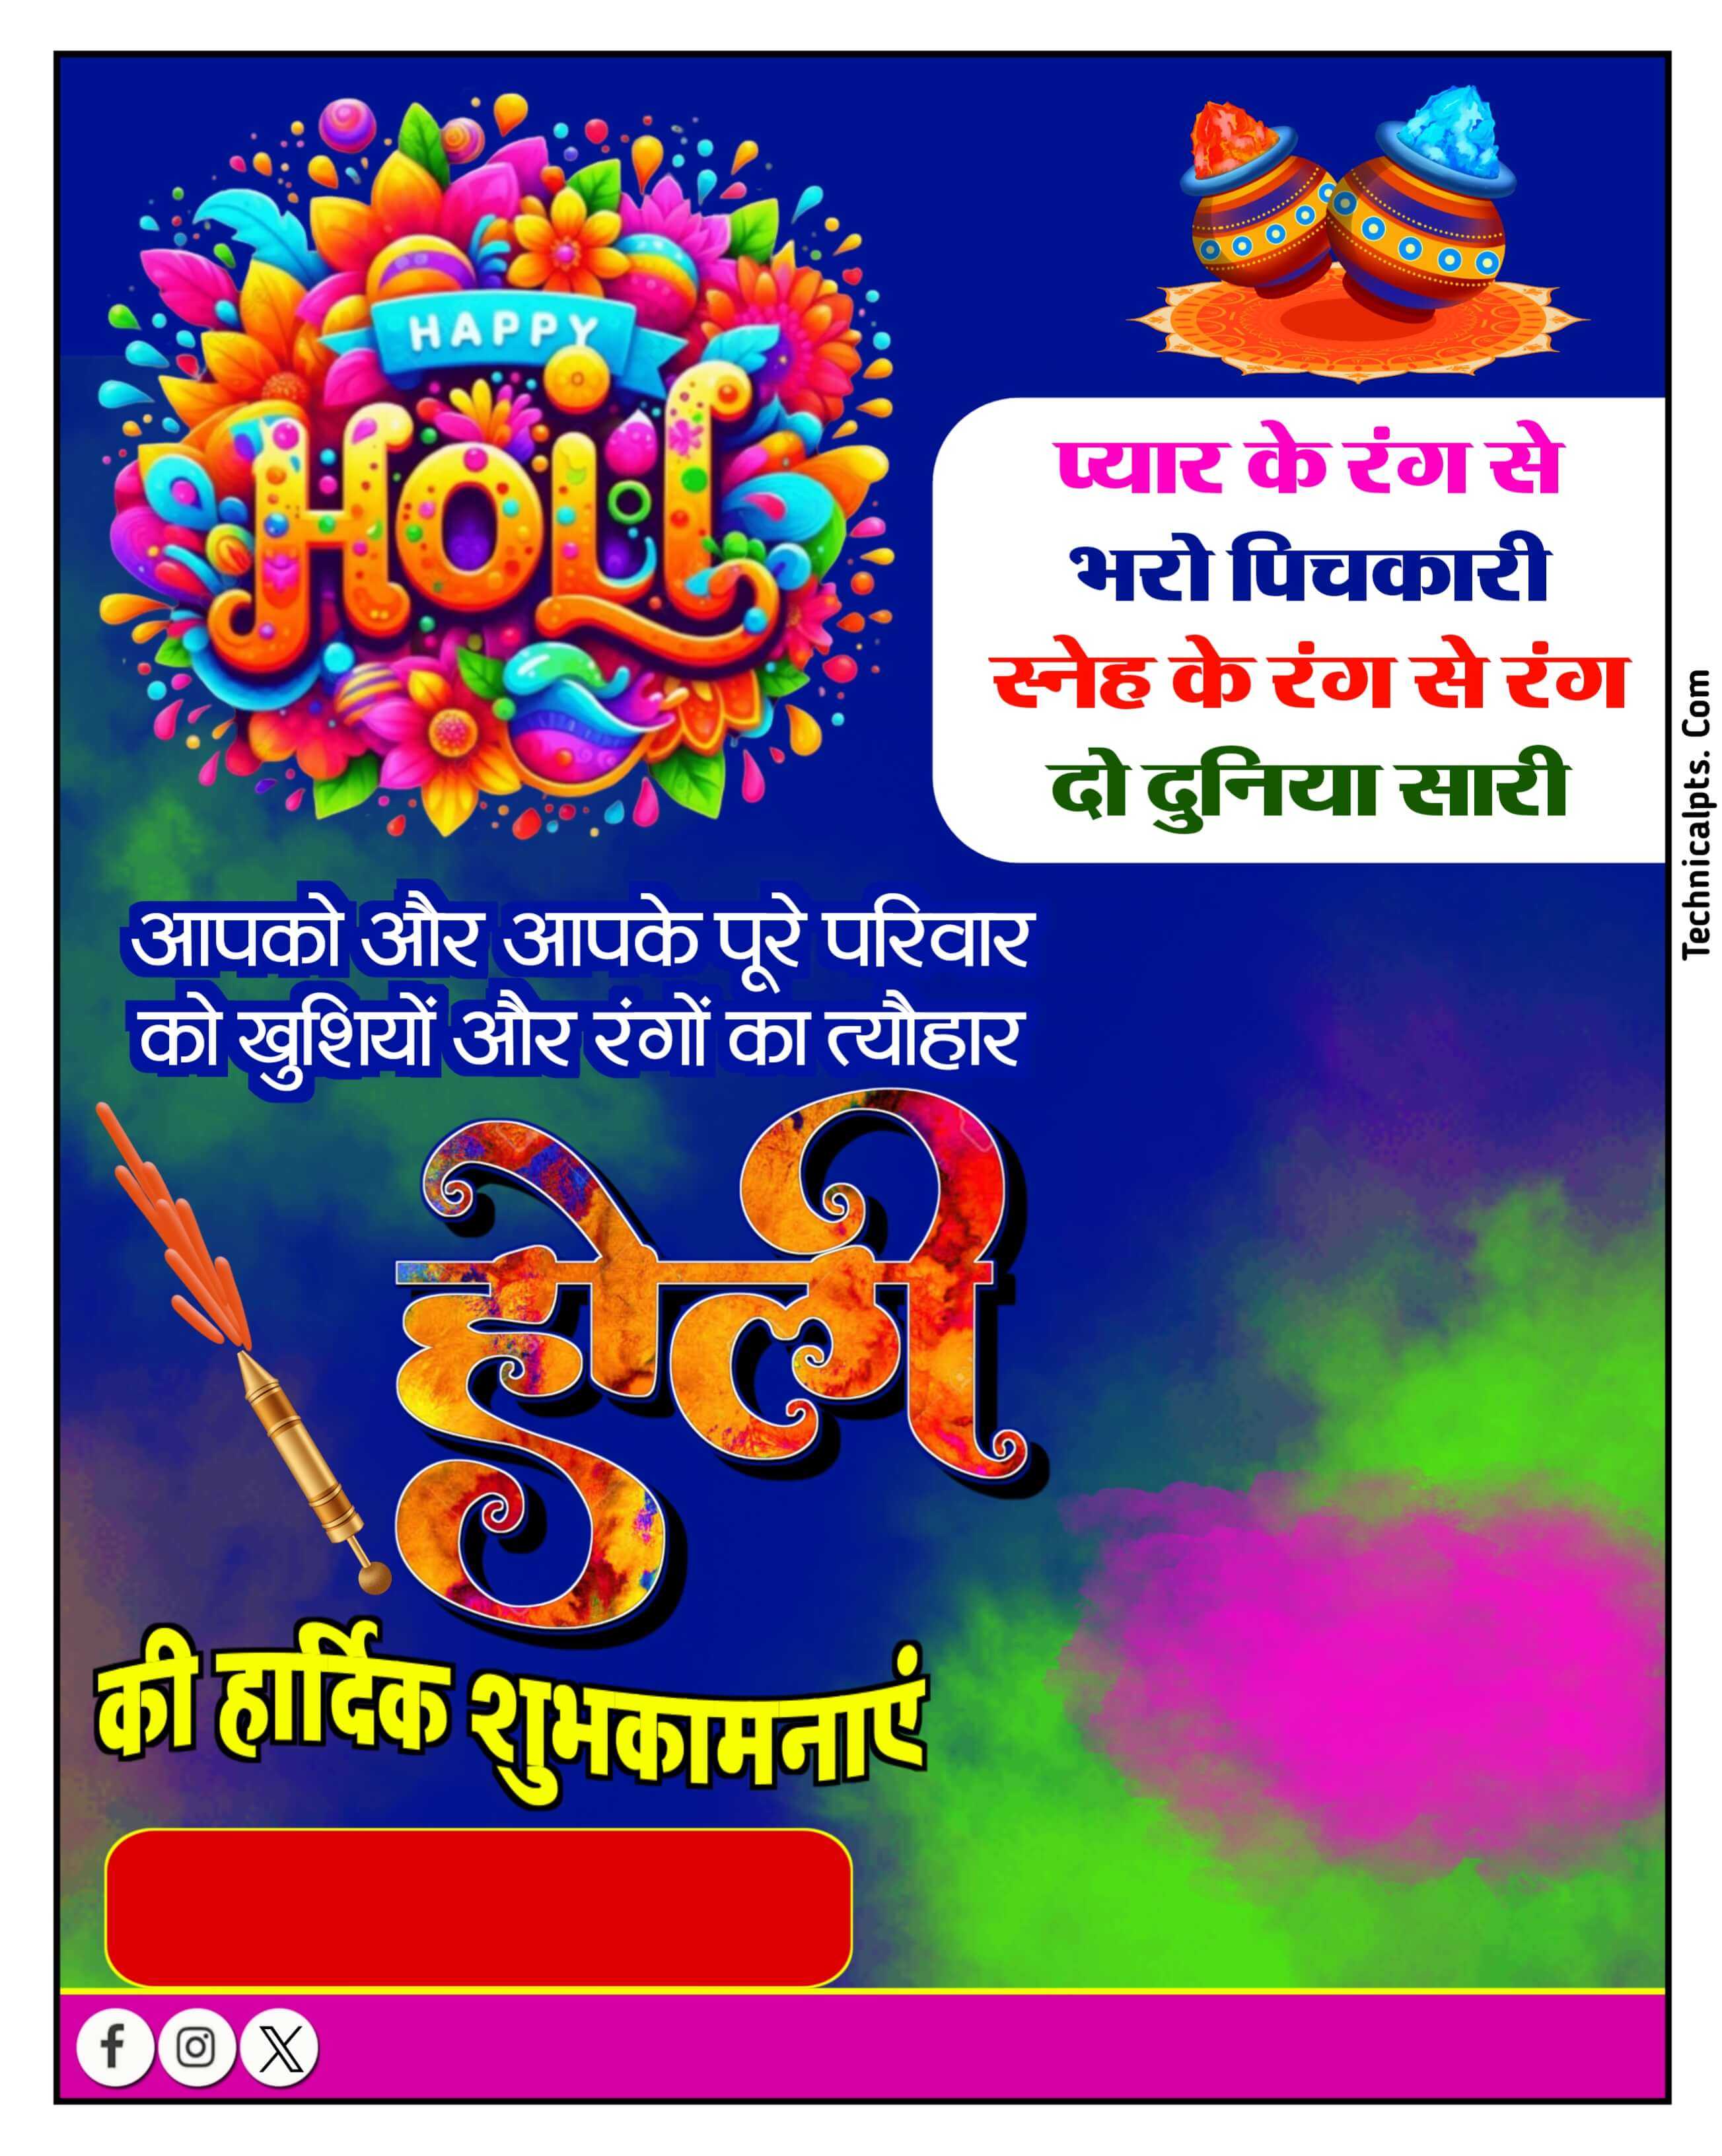 Free Holi poster plp file download | Holi ka poster Kaise banaen mobile se| Holi banner editing plp file download